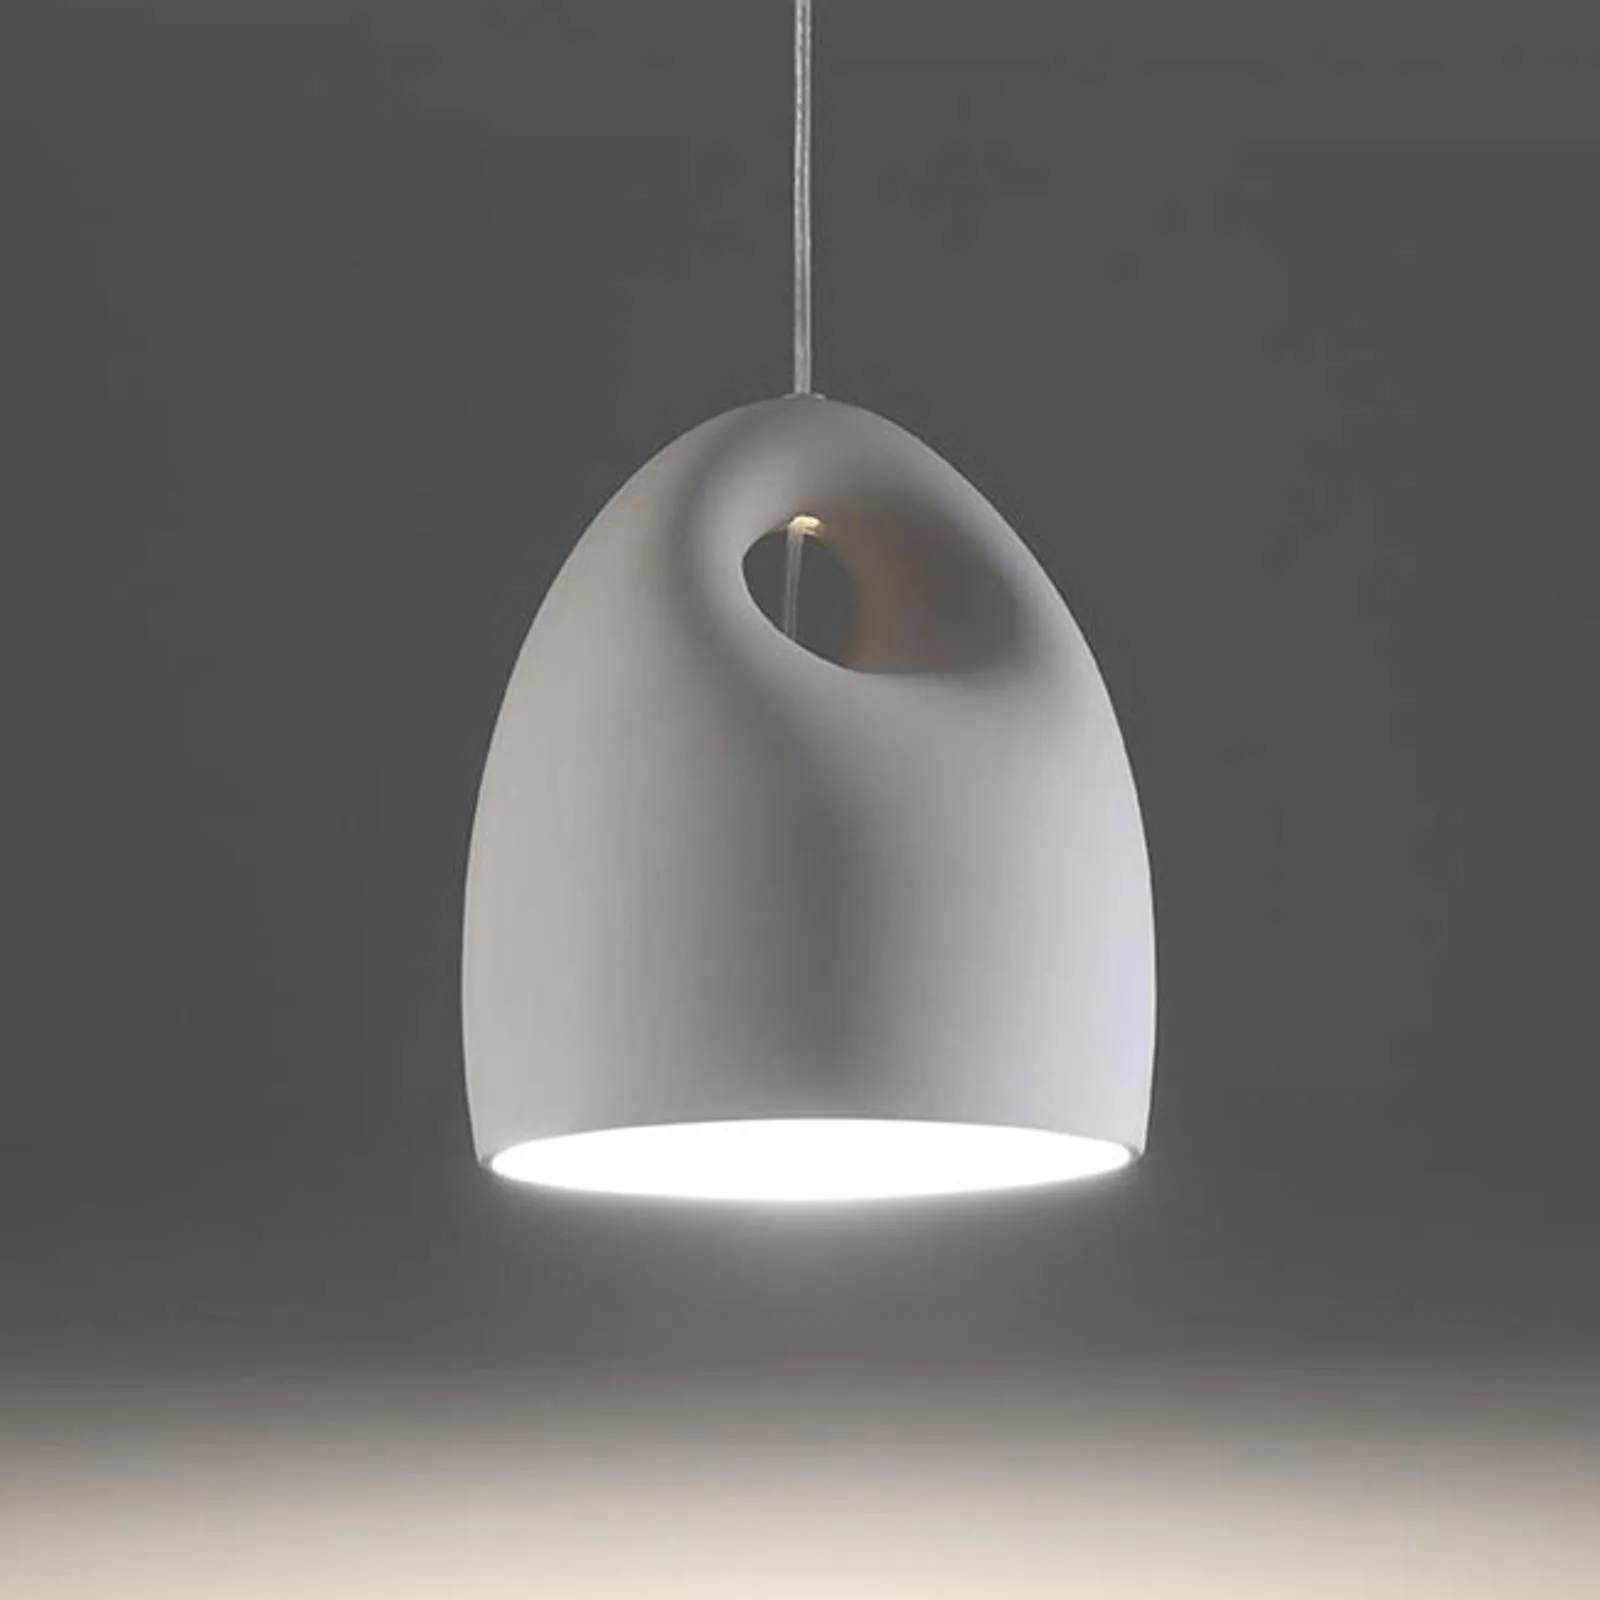 Kano hanging light, white ceramic lampshade